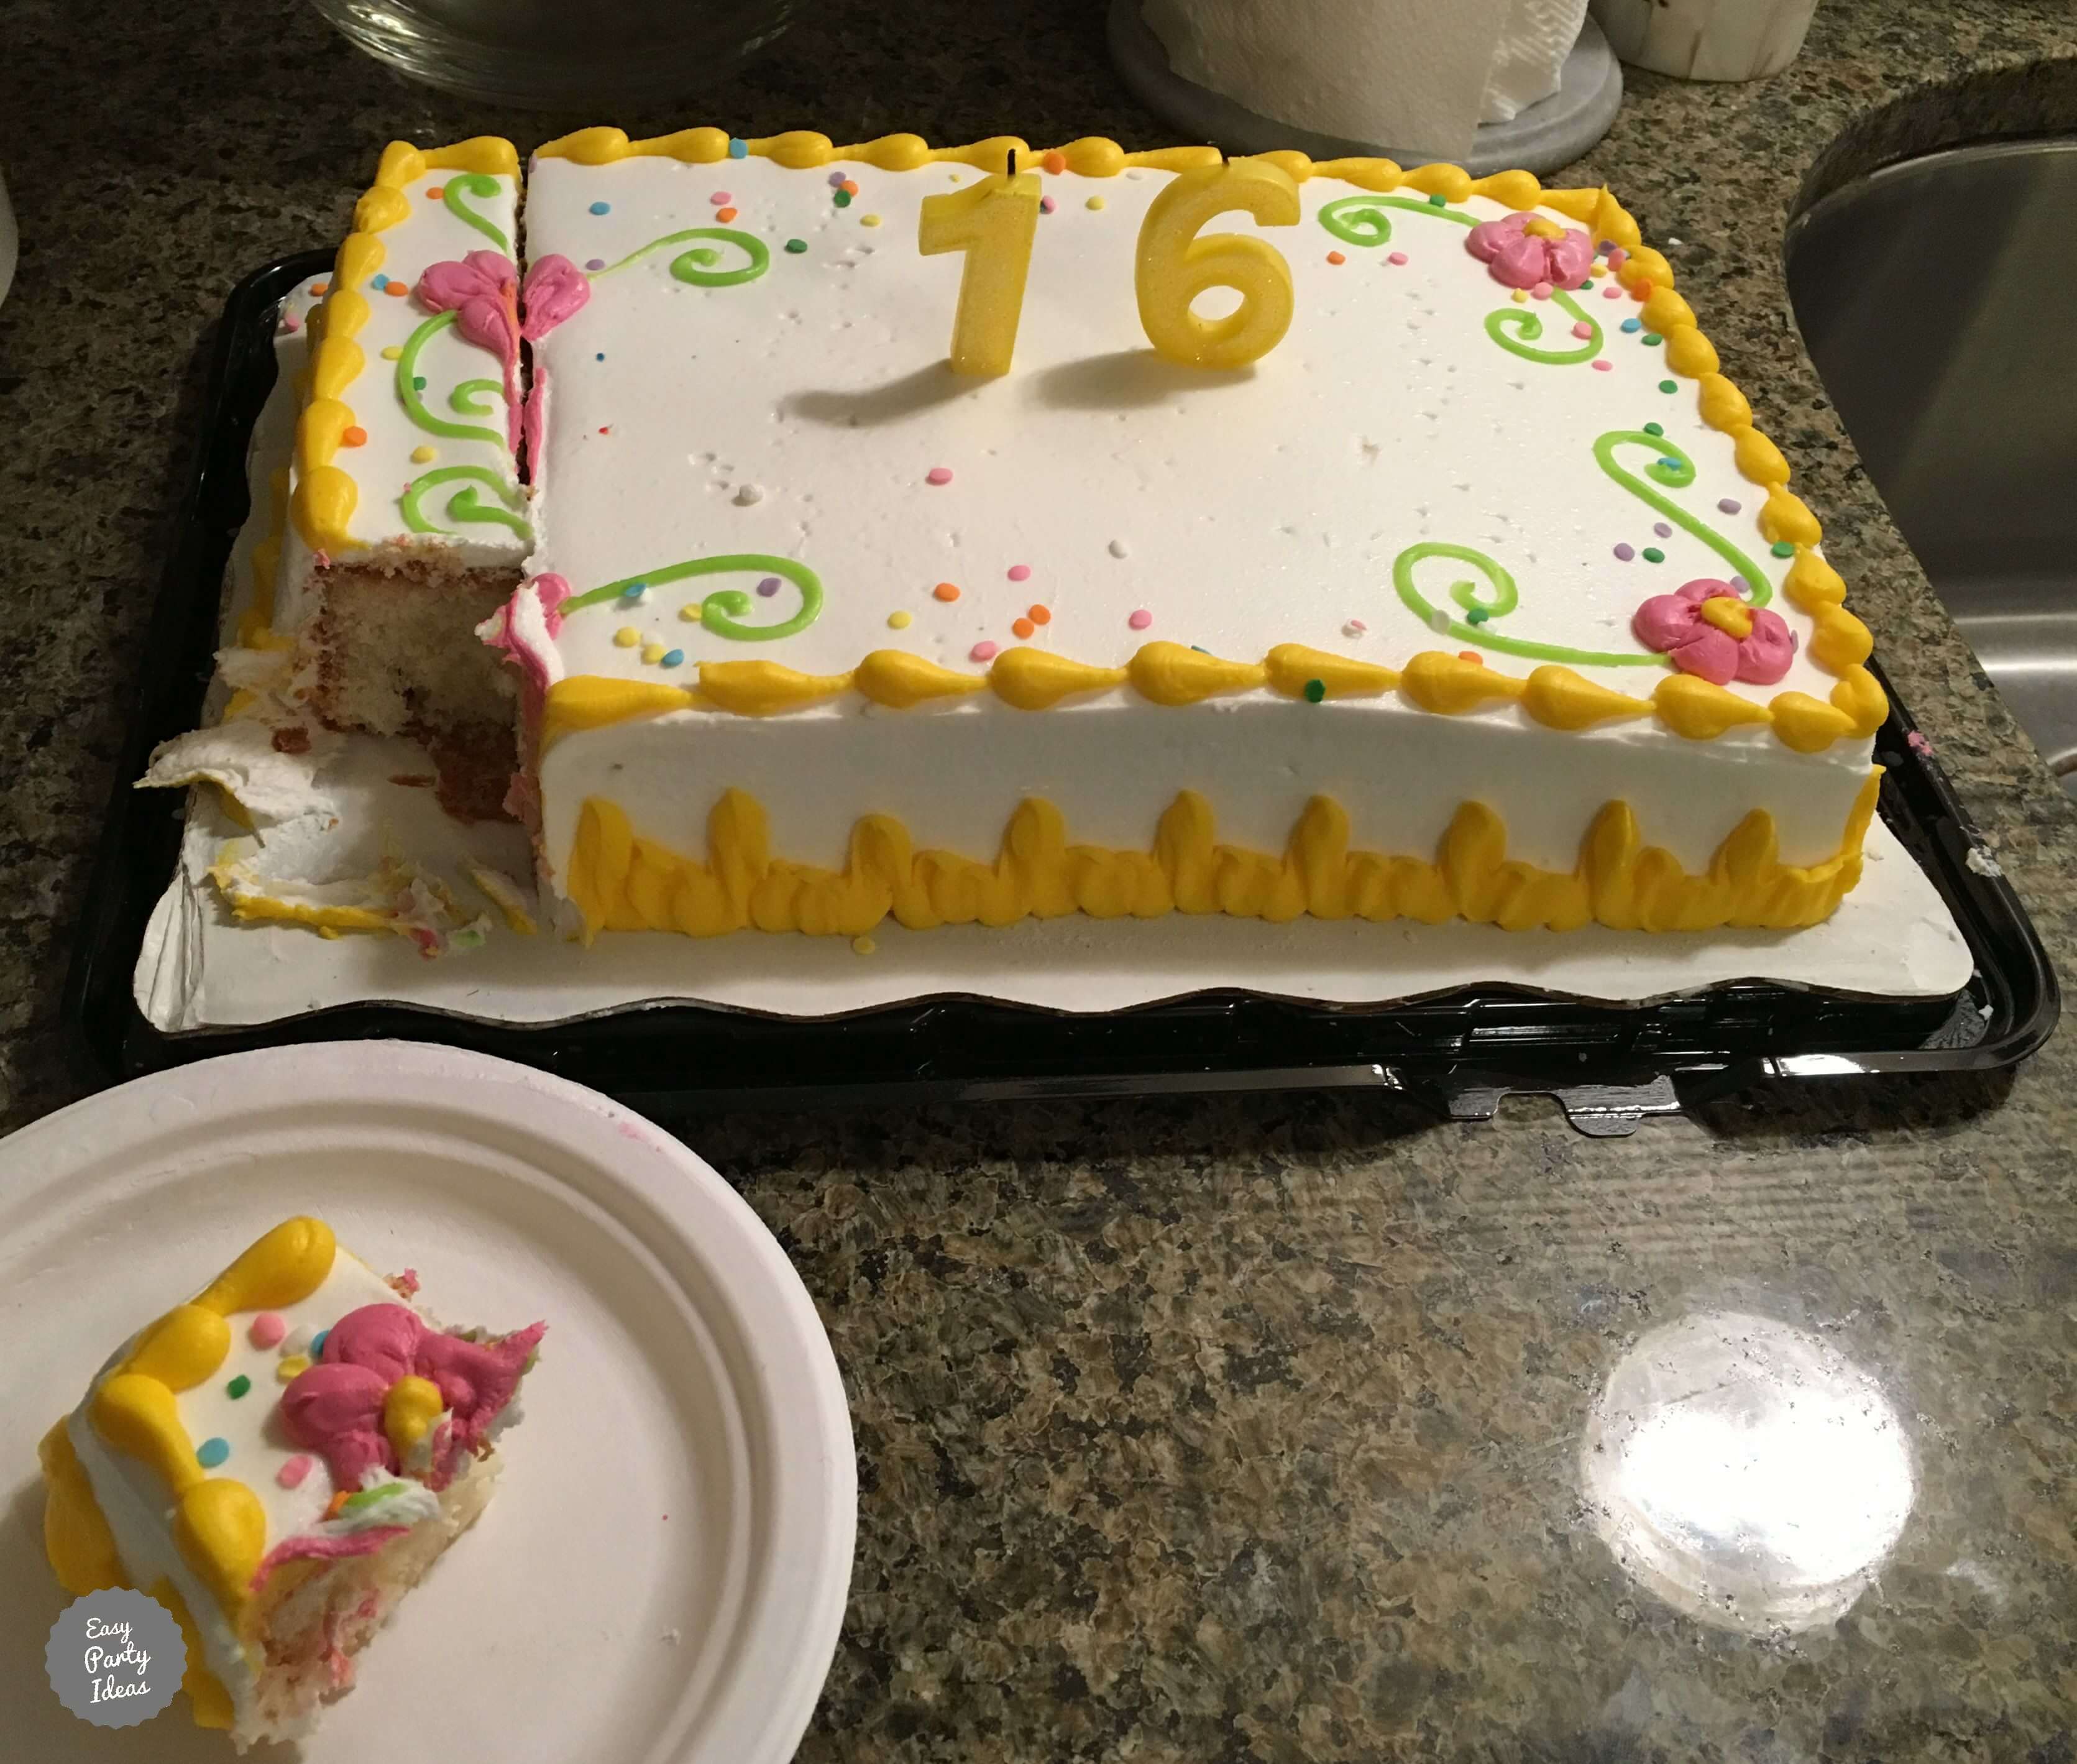 16th Birthday Party Cake